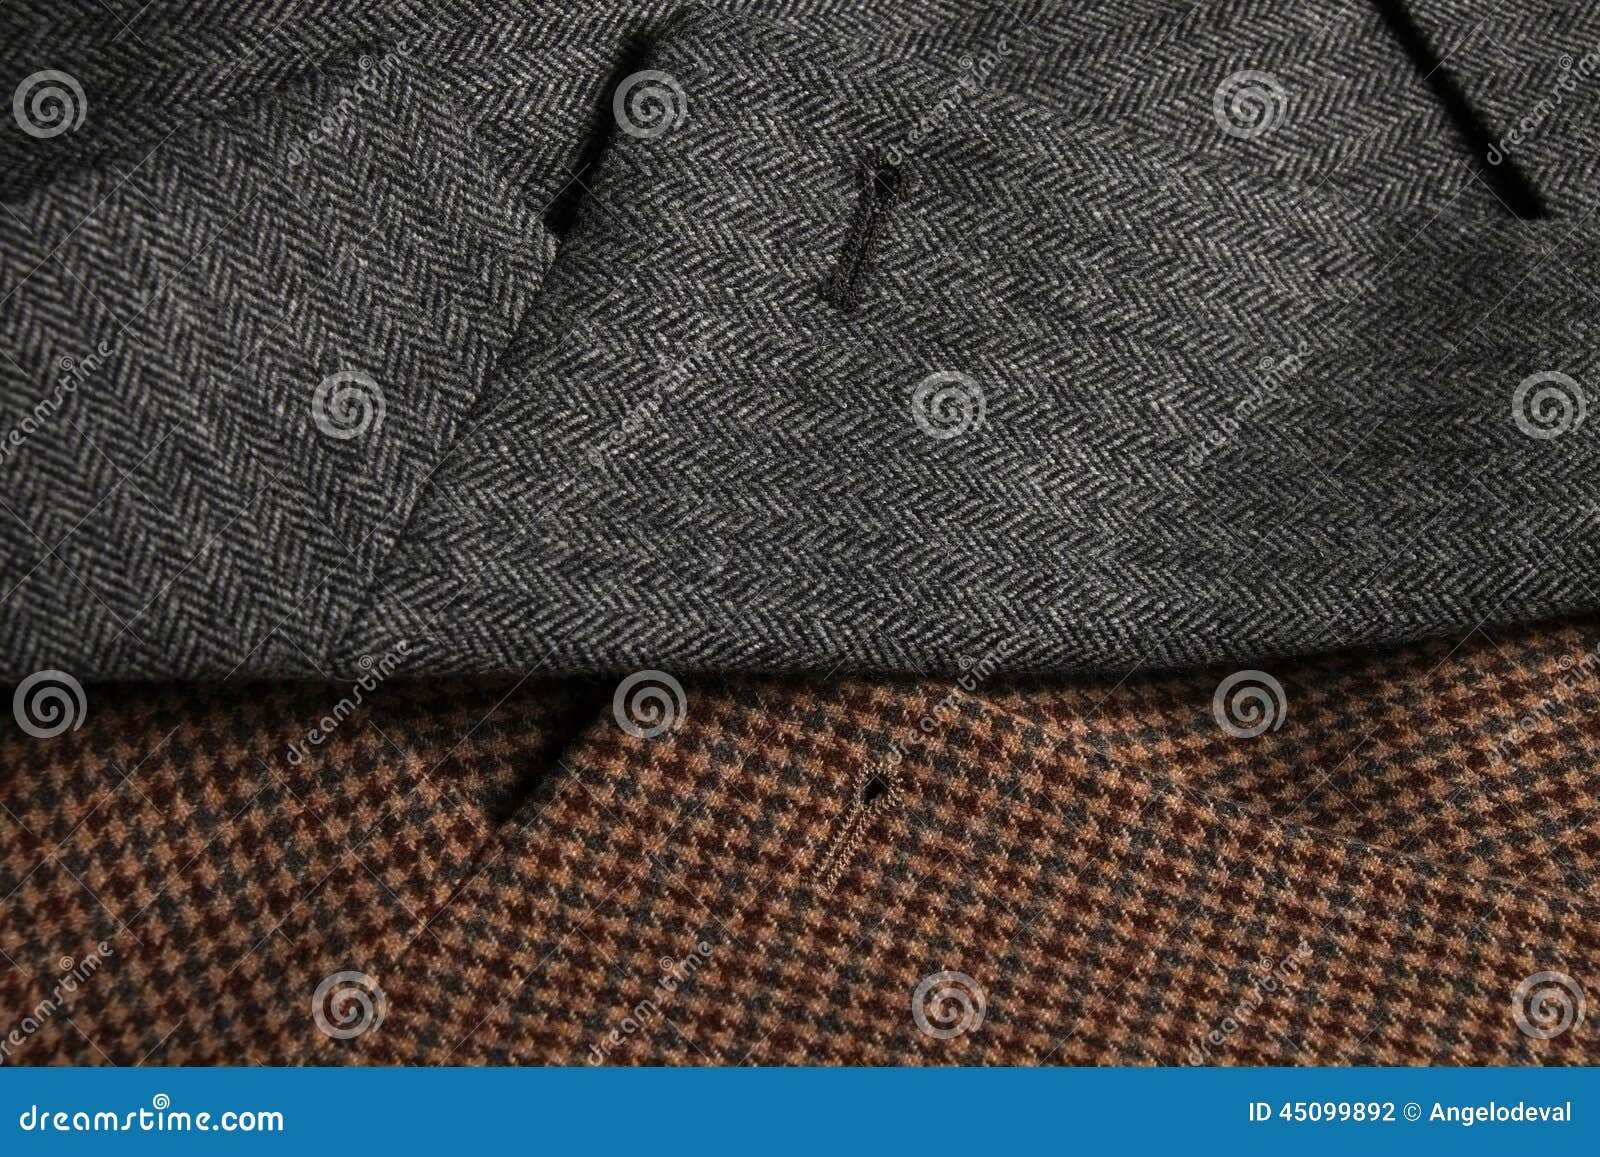 two tweed coat lapels side-by-side